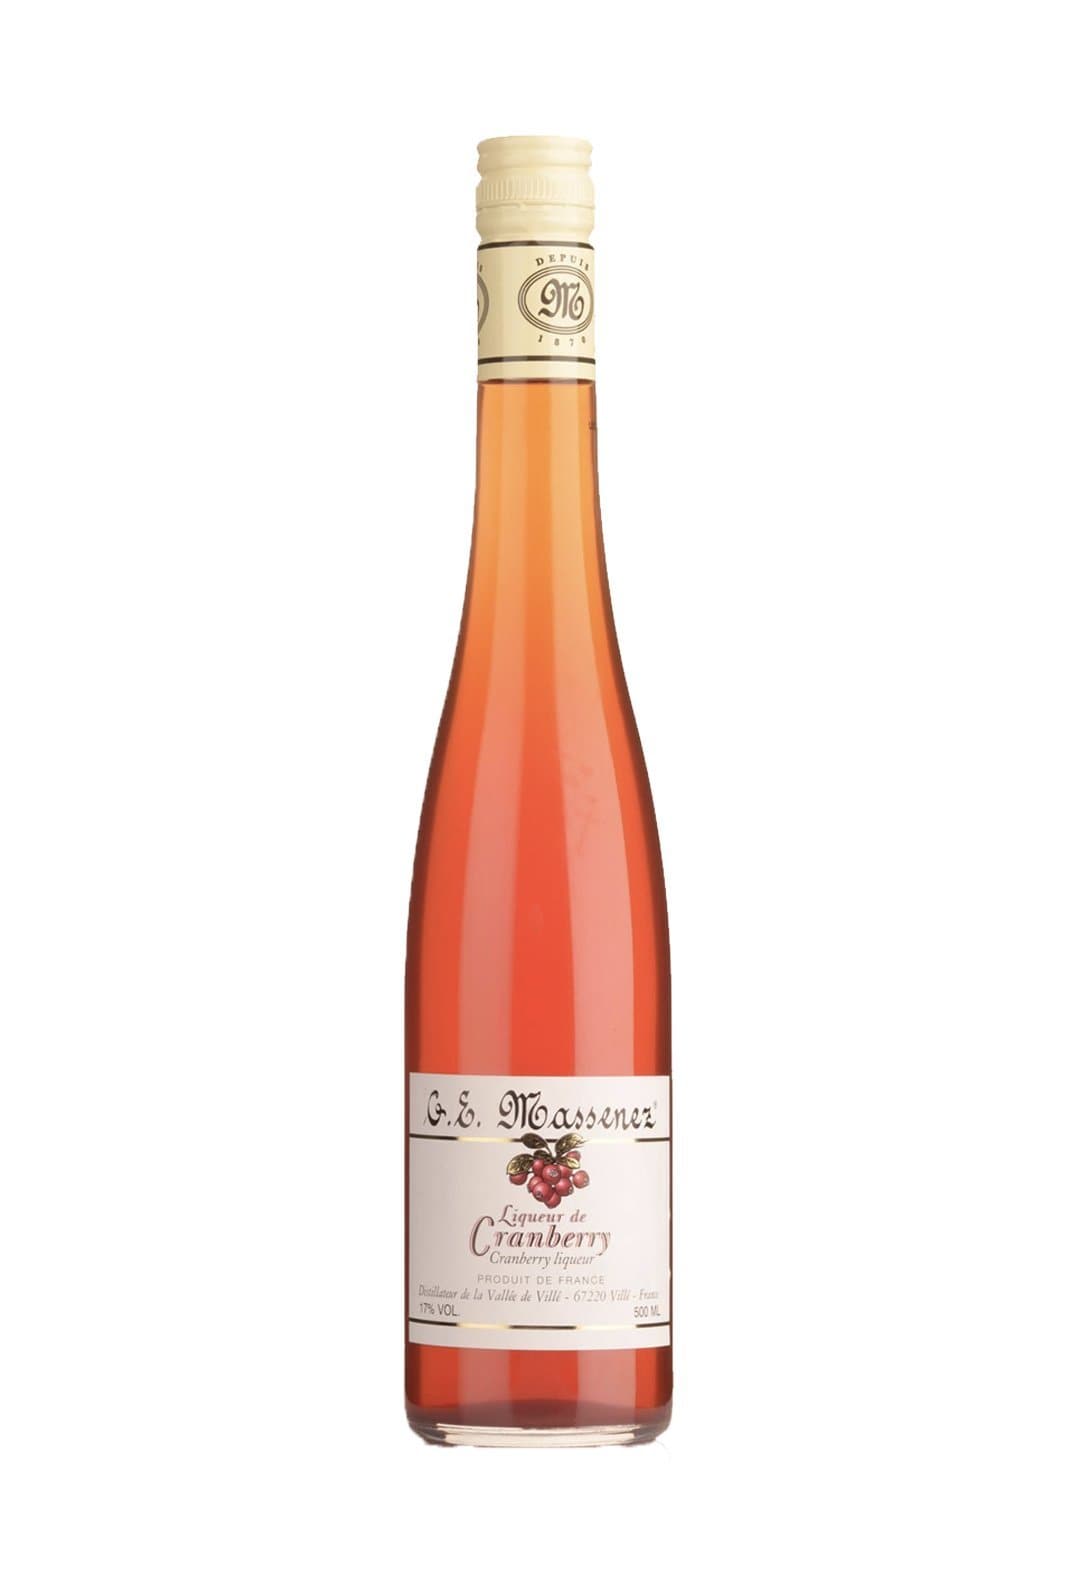 Massenez Liqueur de Cranberry 17% 500ml | Liqueurs | Shop online at Spirits of France